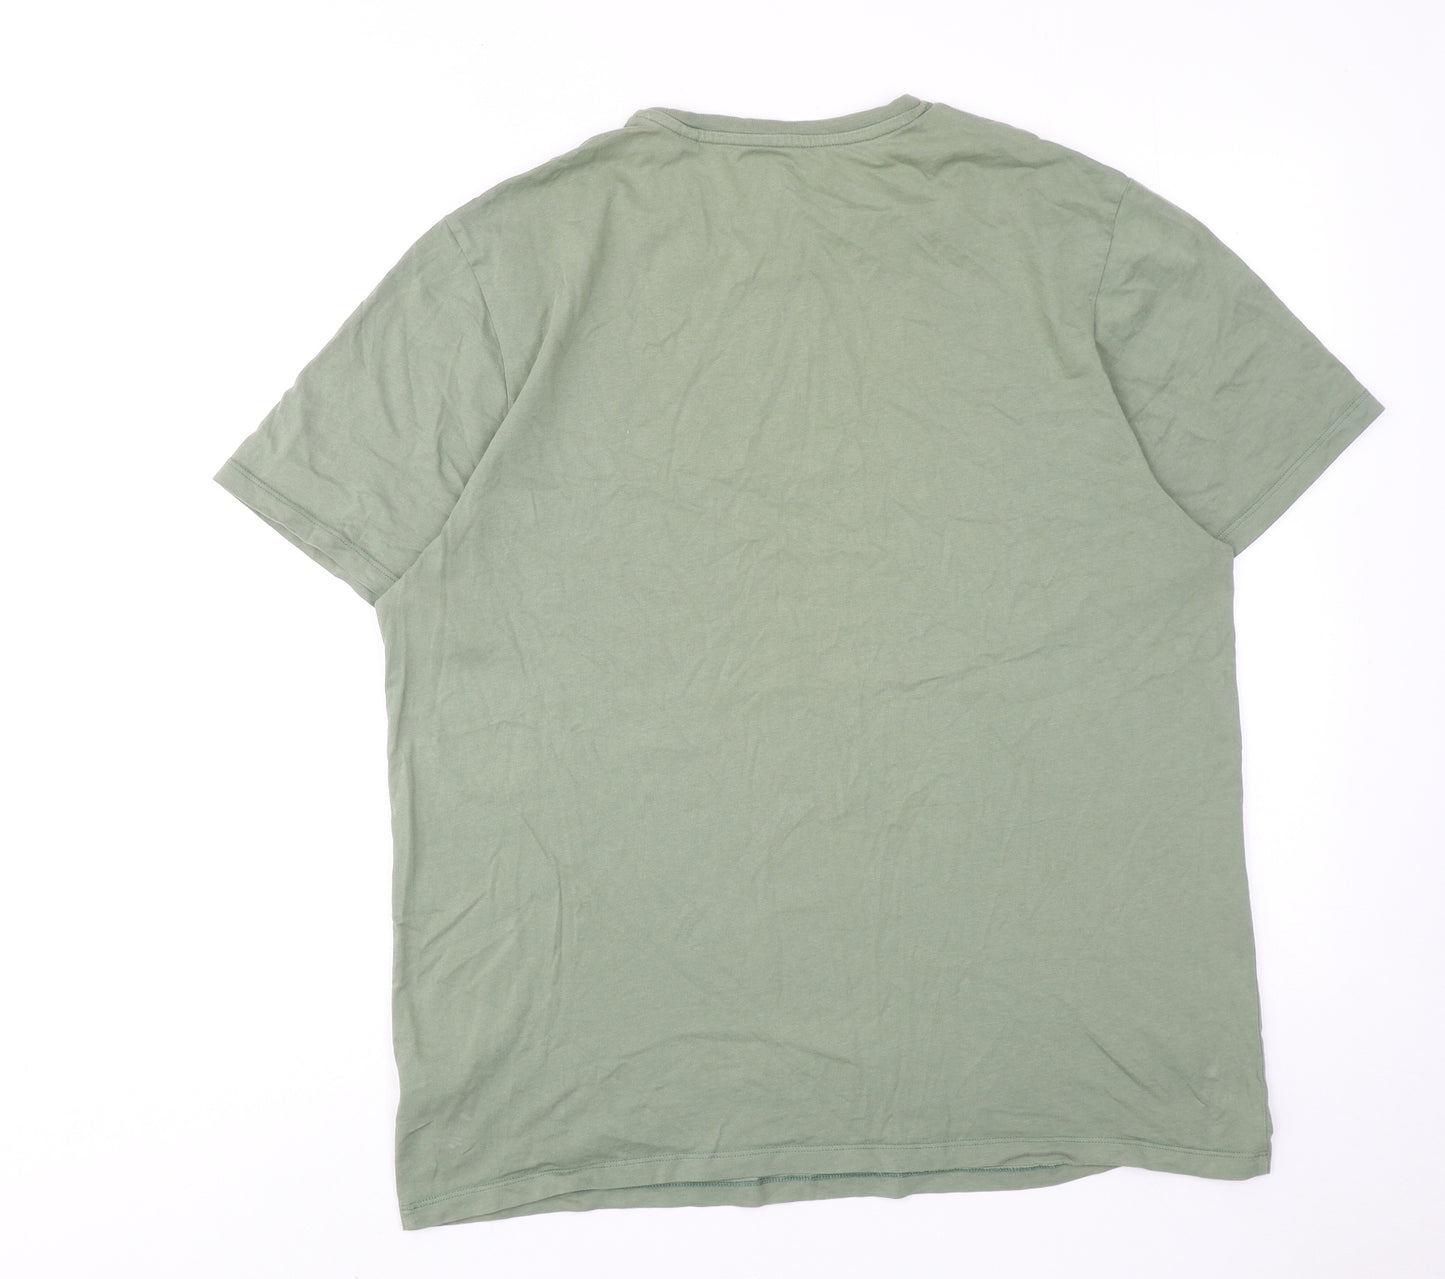 Boden Mens Green Cotton T-Shirt Size L Round Neck